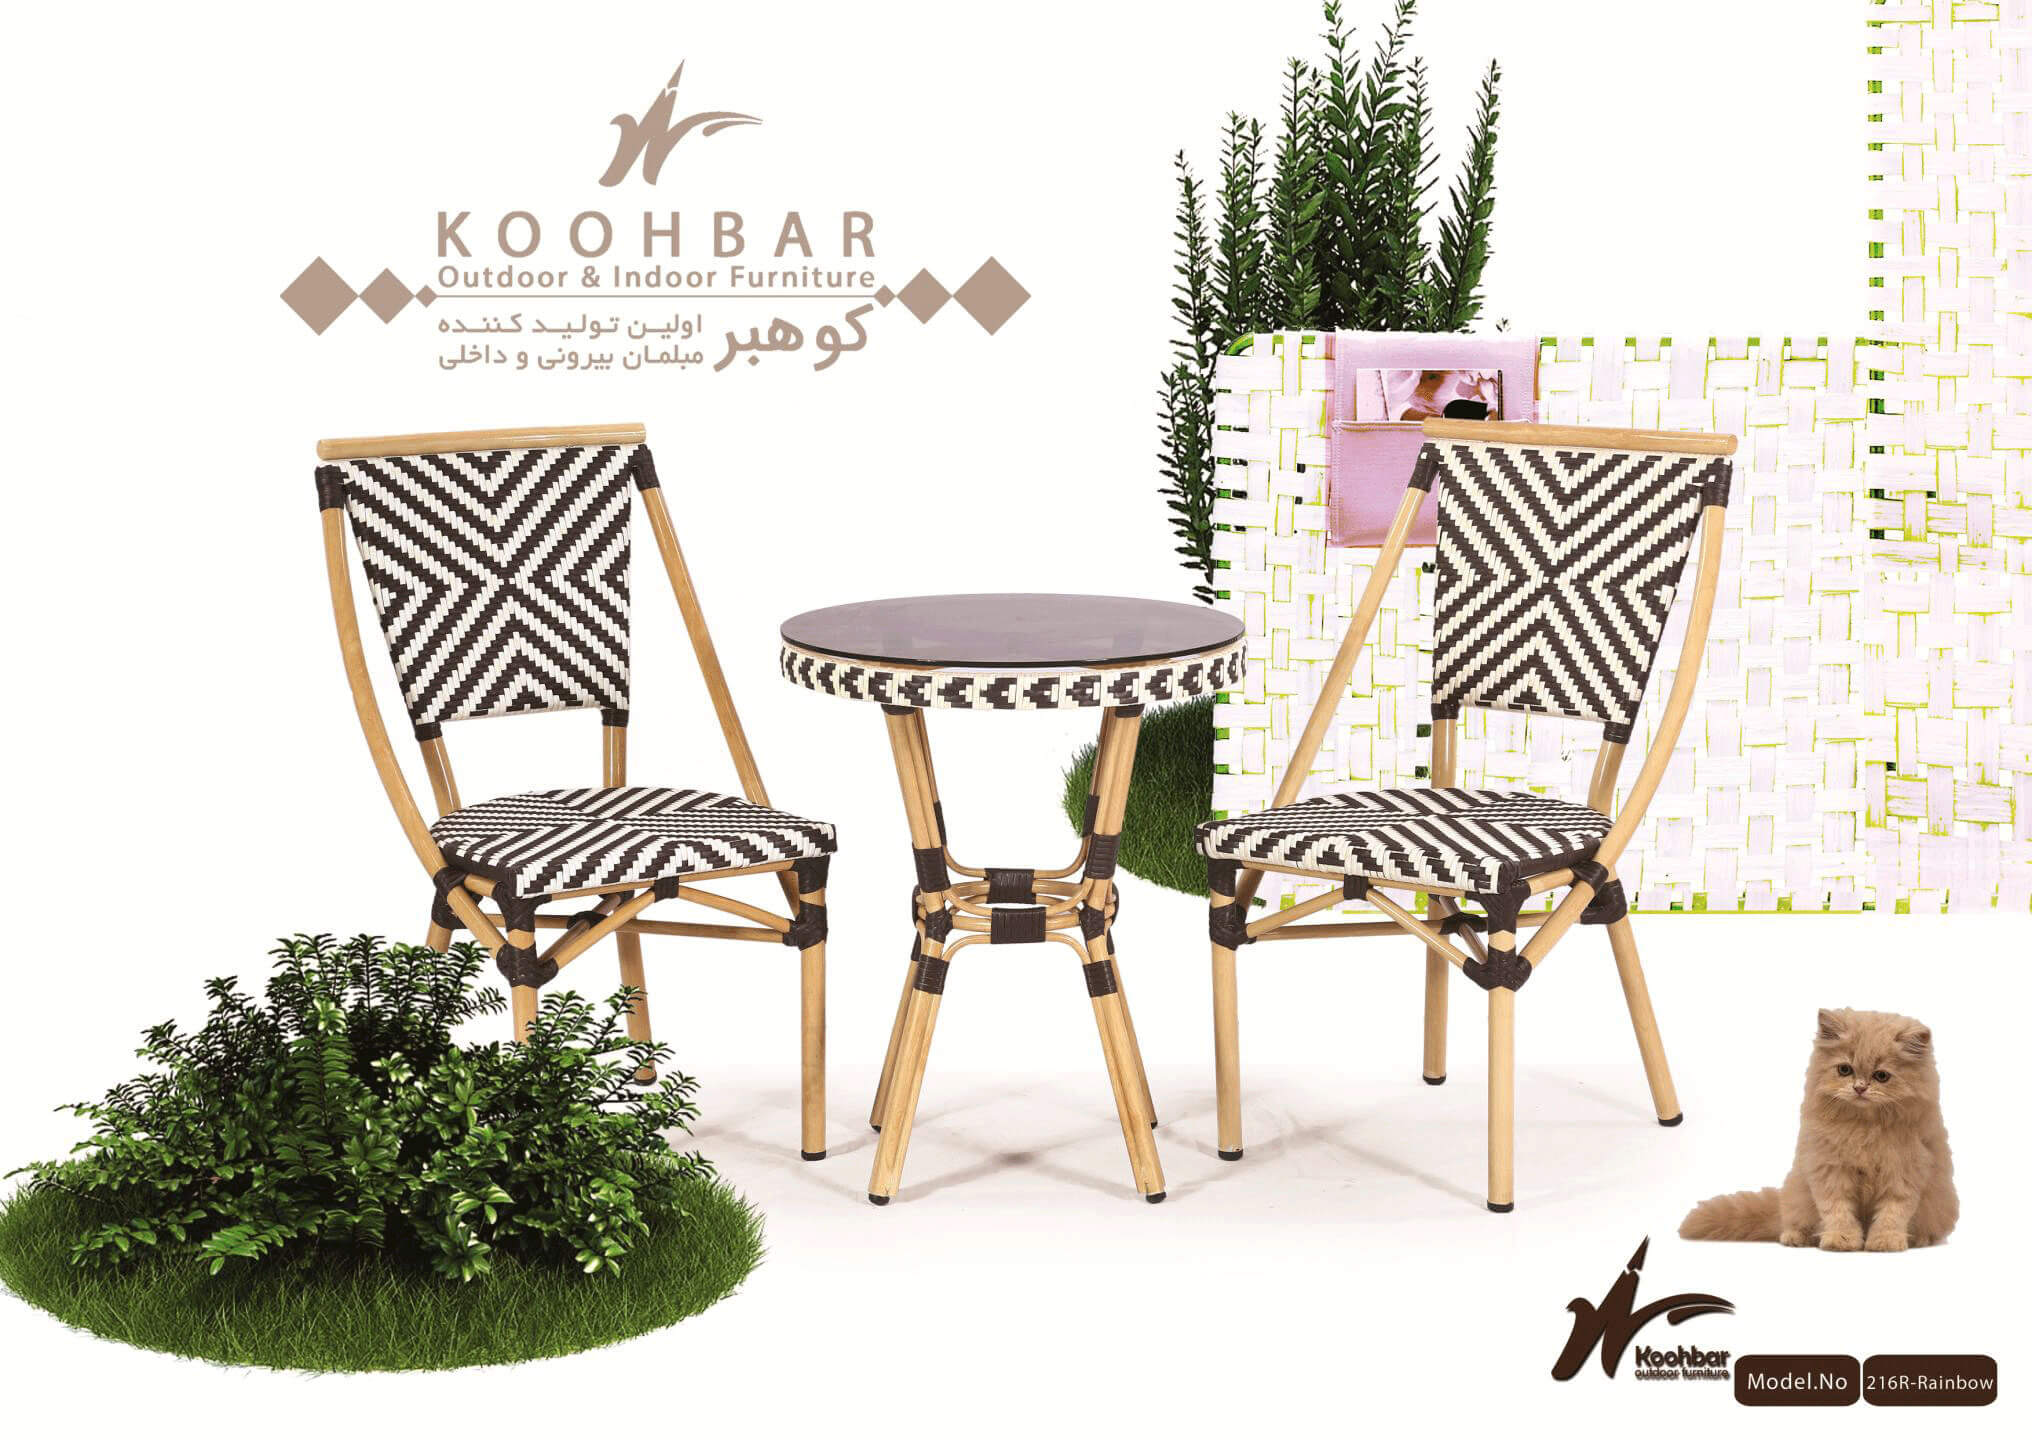 kohbar patio conversation sets 216 model0 - ست میز صندلی حصیری فضای باز کوهبر مدل ۲۱۶ -  - patio-conversation-sets